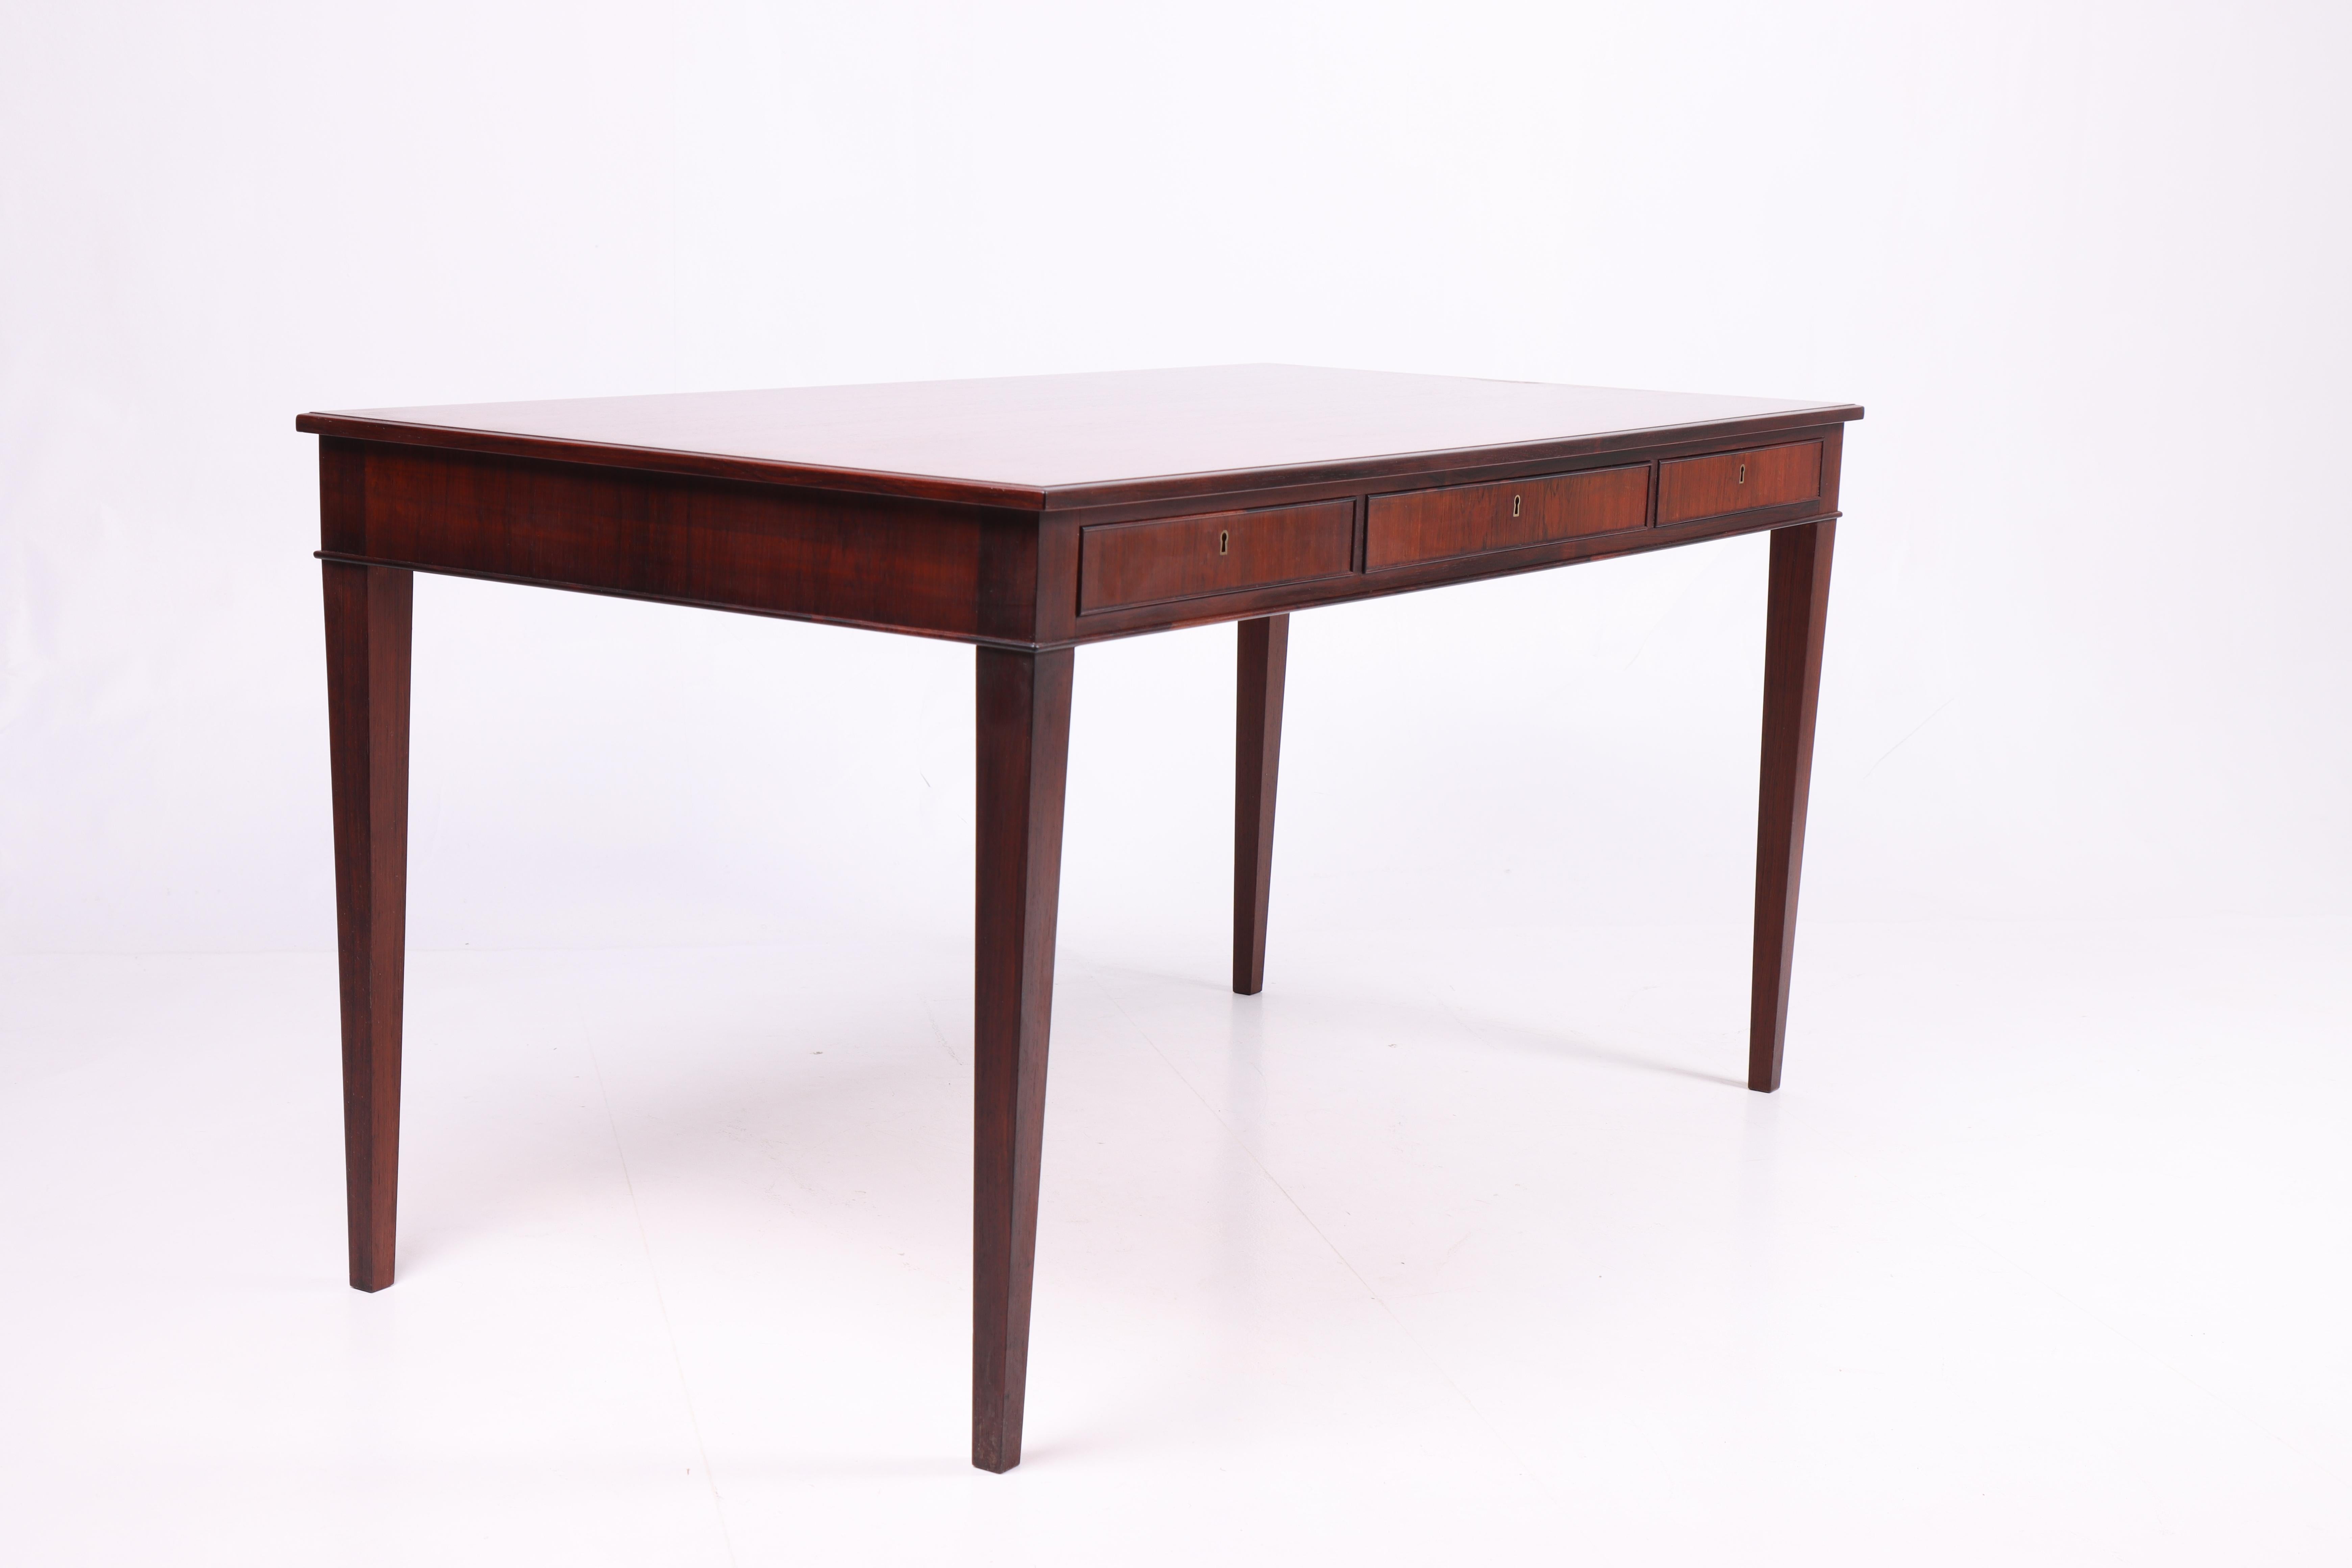 Midcentury Desk in Rosewood Designed by Frits Heningsen, 1950s For Sale 1